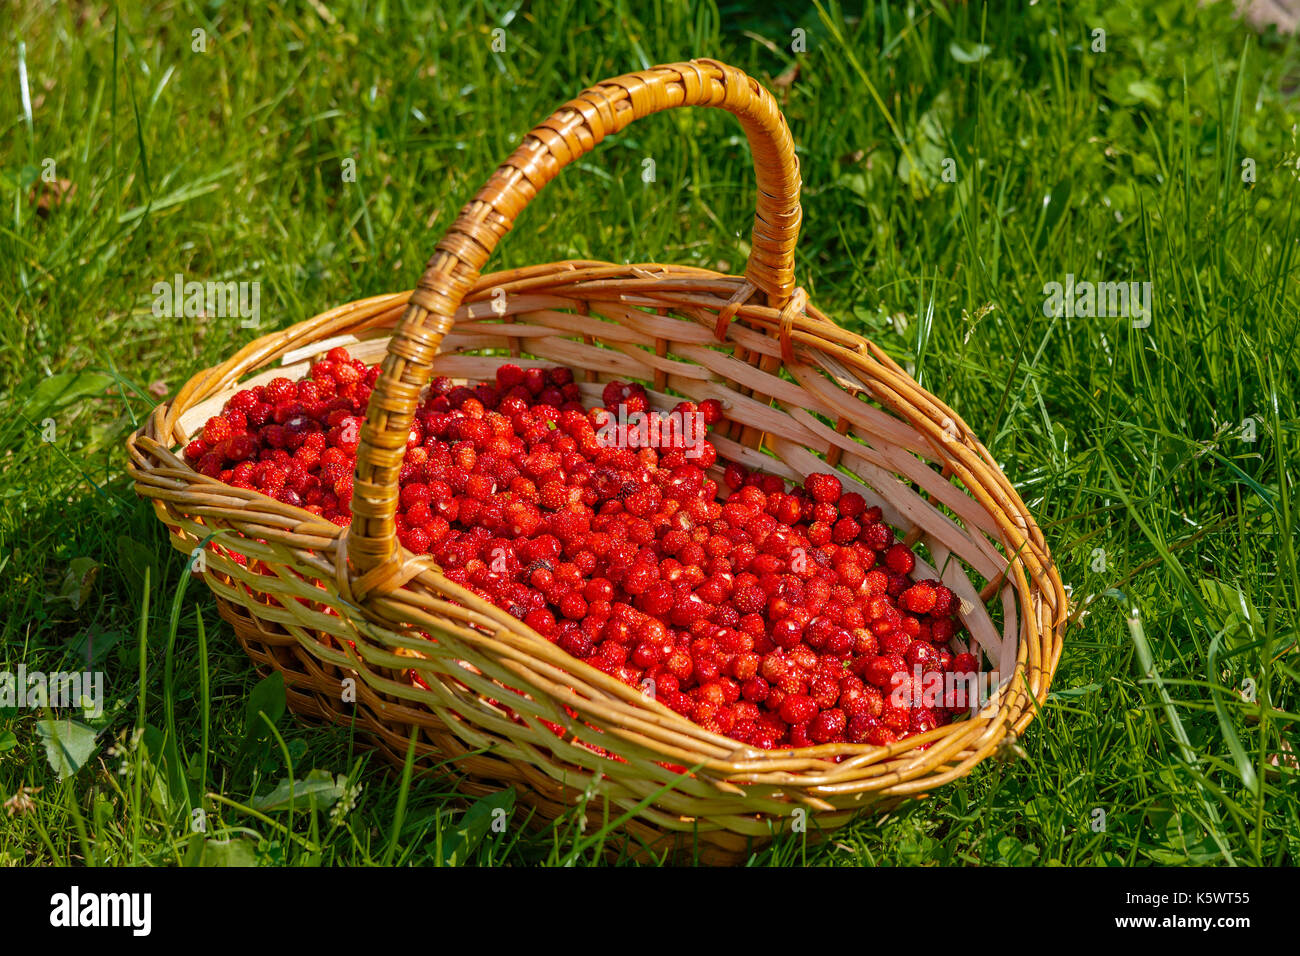 Korb voller Reife Beeren eines Wilde Erdbeere auf grünem Gras Stockfoto